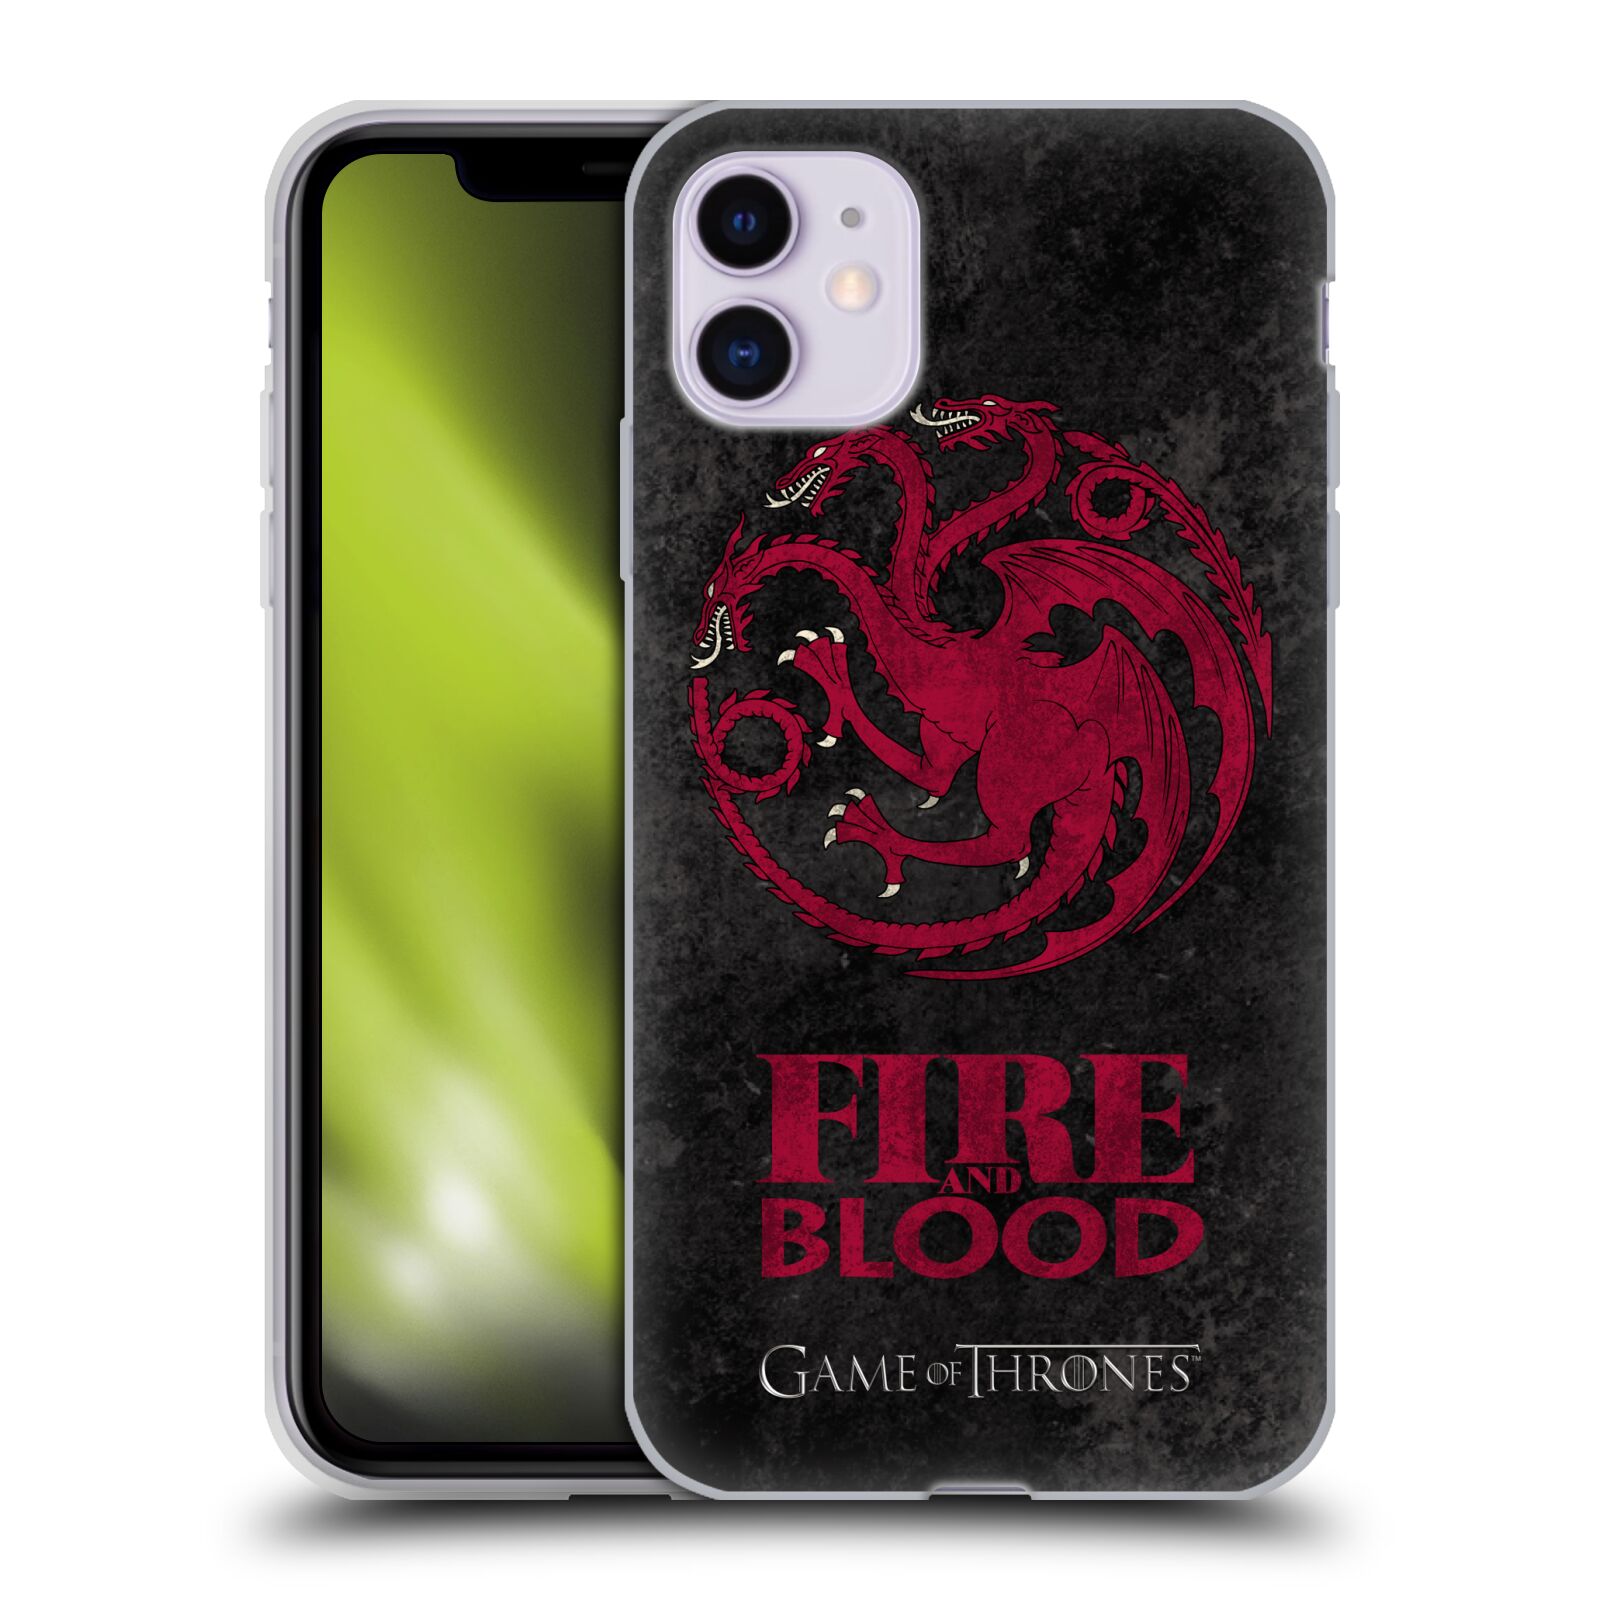 Silikonové pouzdro na mobil Apple iPhone 11 - Head Case - Hra o trůny - Sigils Targaryen - Fire and Blood (Silikonový kryt, obal, pouzdro na mobilní telefon Apple iPhone 11 s displejem 6,1" s motivem Hra o trůny - Sigils Targaryen - Fire and Blood)